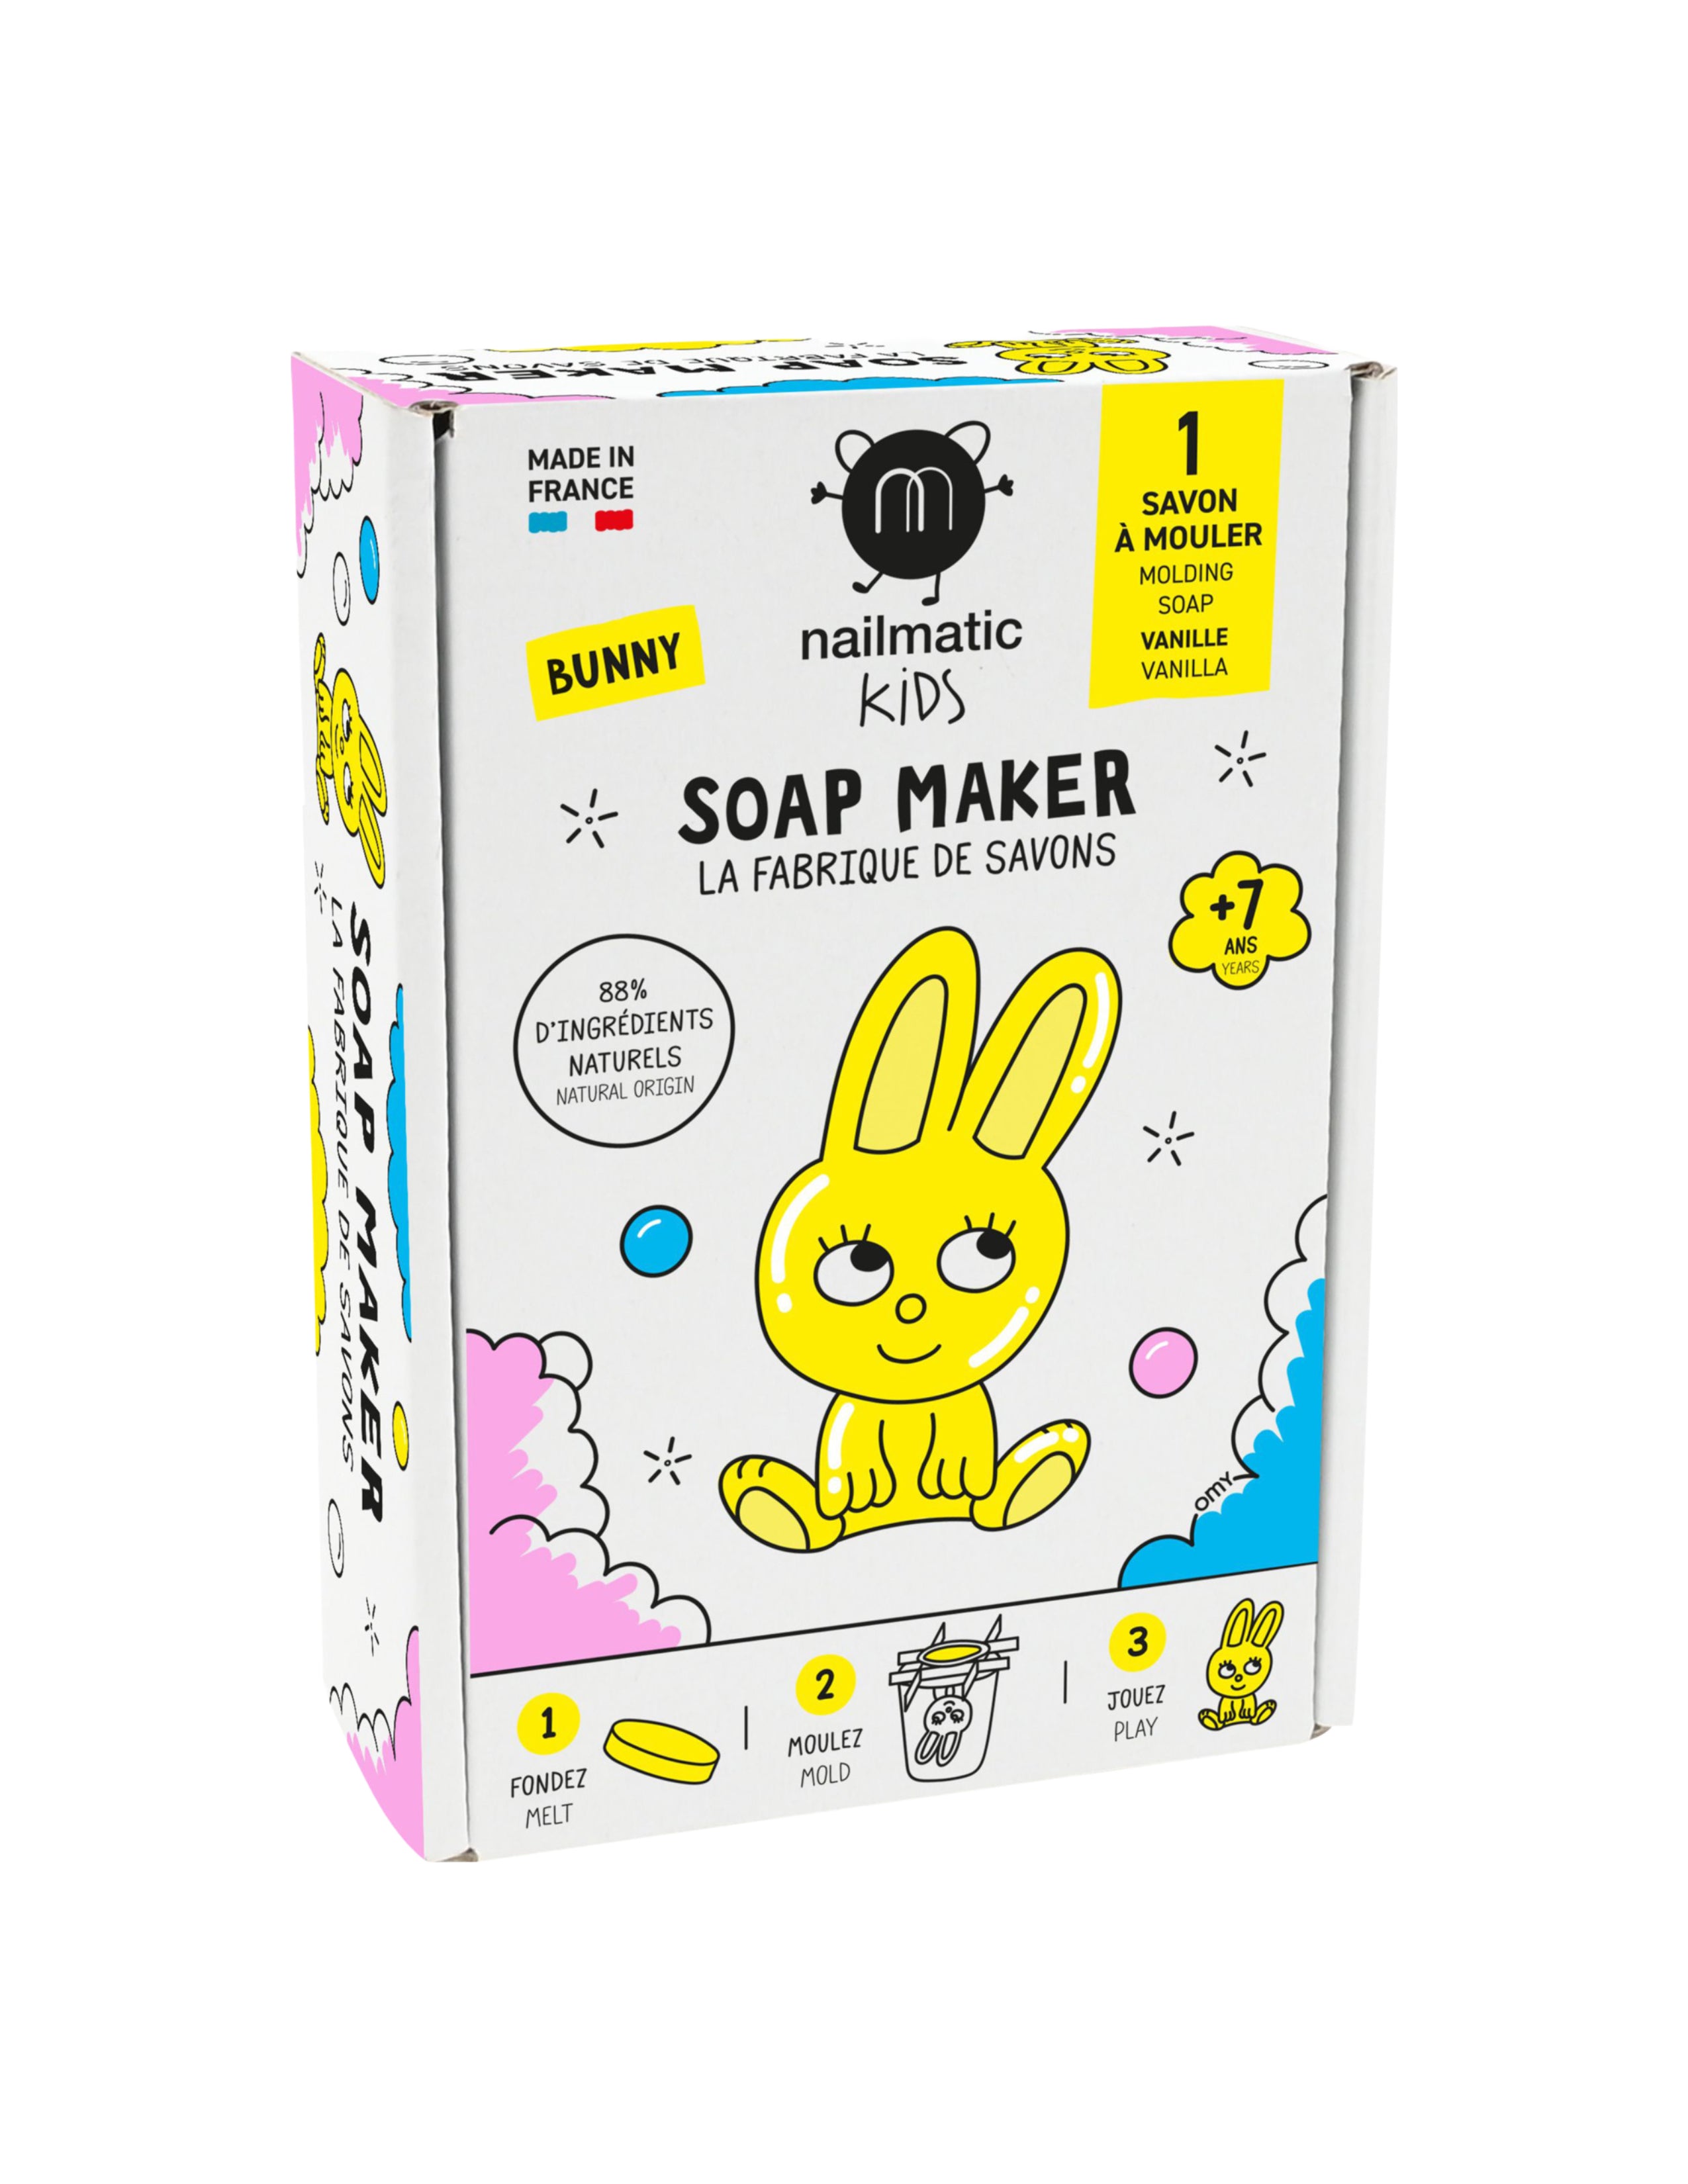 DIY Soap Maker - Bunny